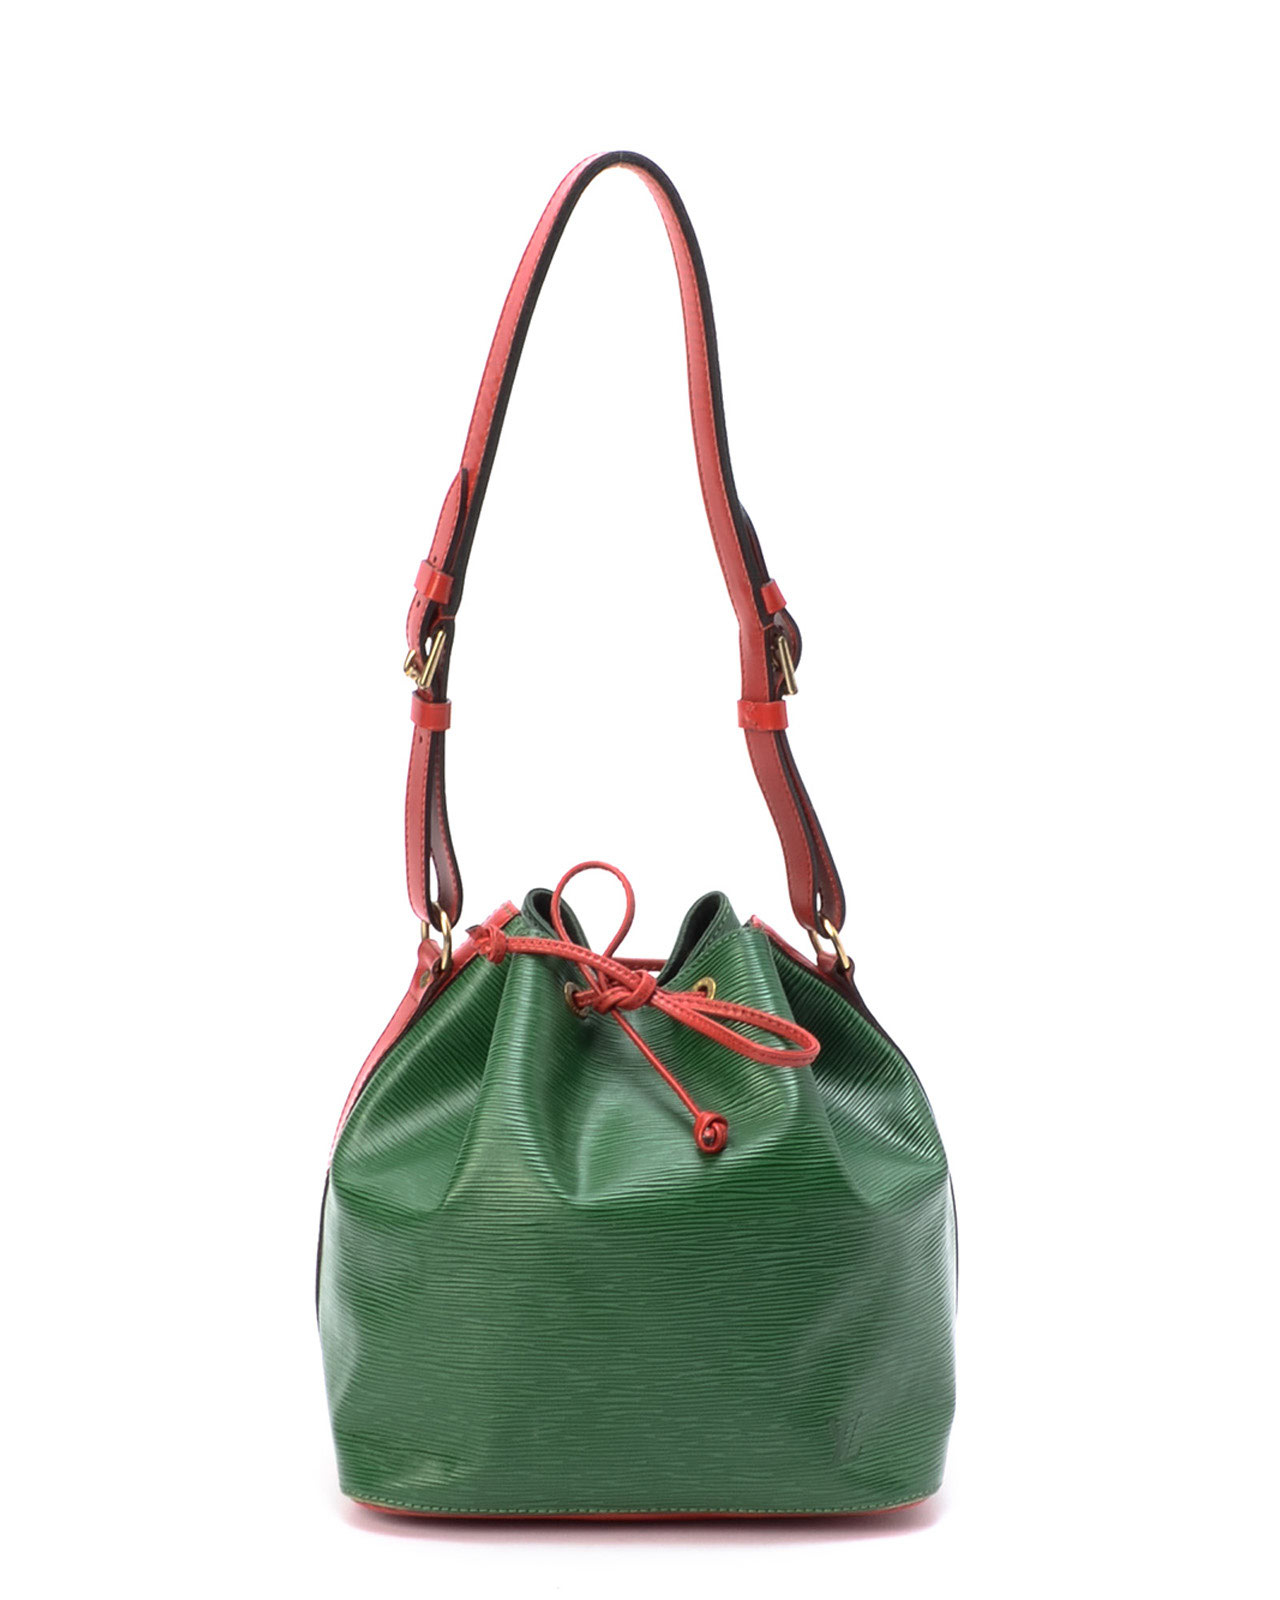 Louis Vuitton Two-Tone Petit Noe Handbag in Green - Lyst